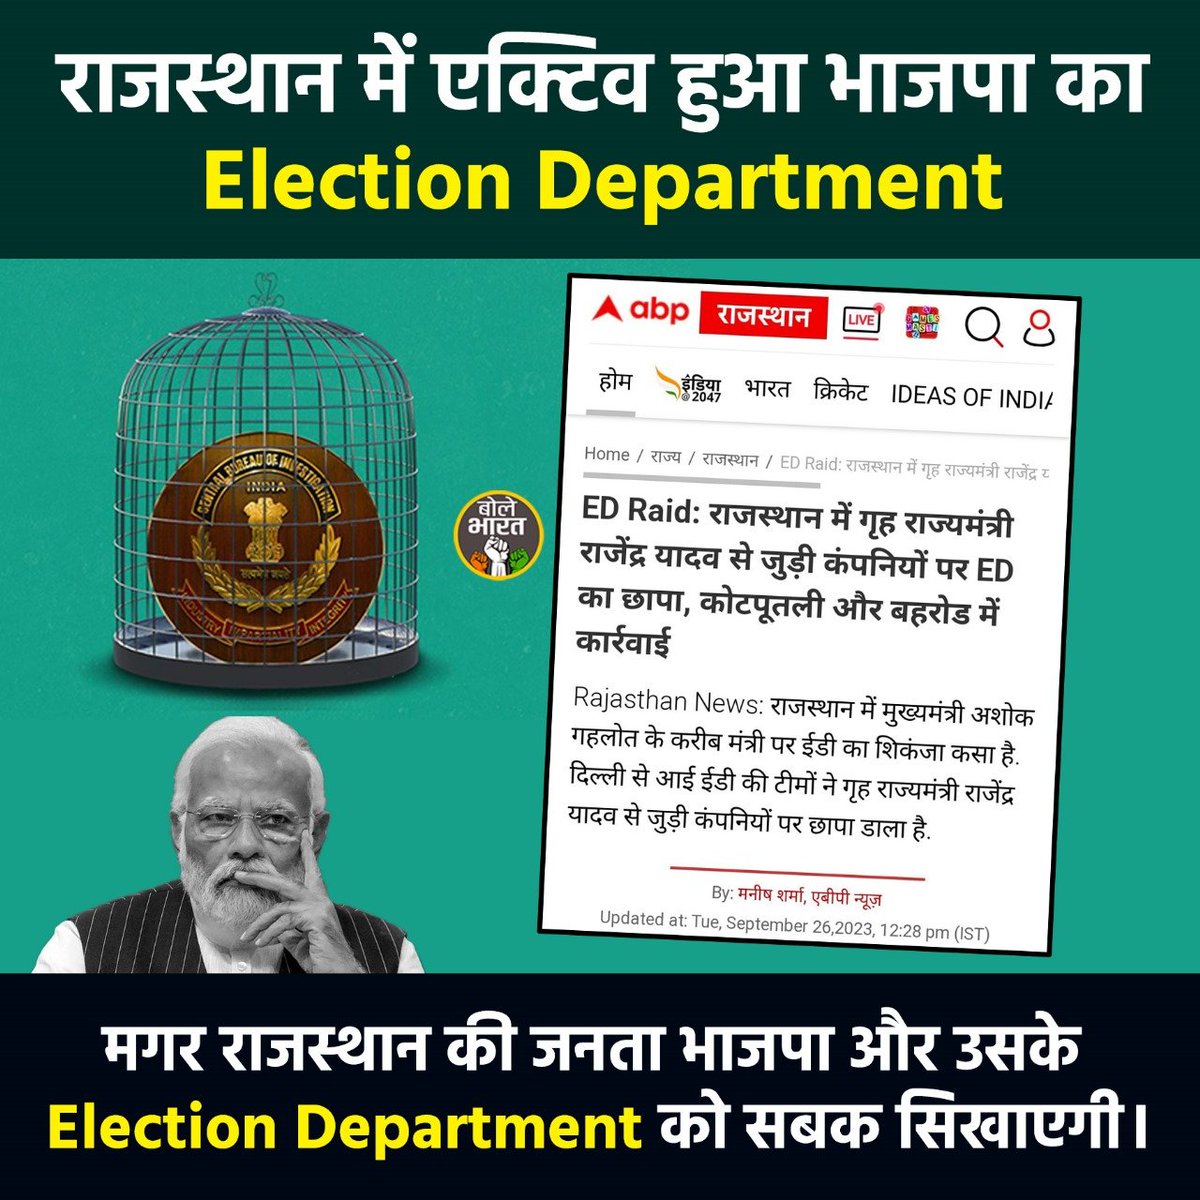 राजस्थान में एक्टिव हुआ भाजपा का
#ElectionDepartment #ED #Rajsthan #Election #BJP #Scam #NarendraModi #Feku #Jumla #ModiDisasterForIndia